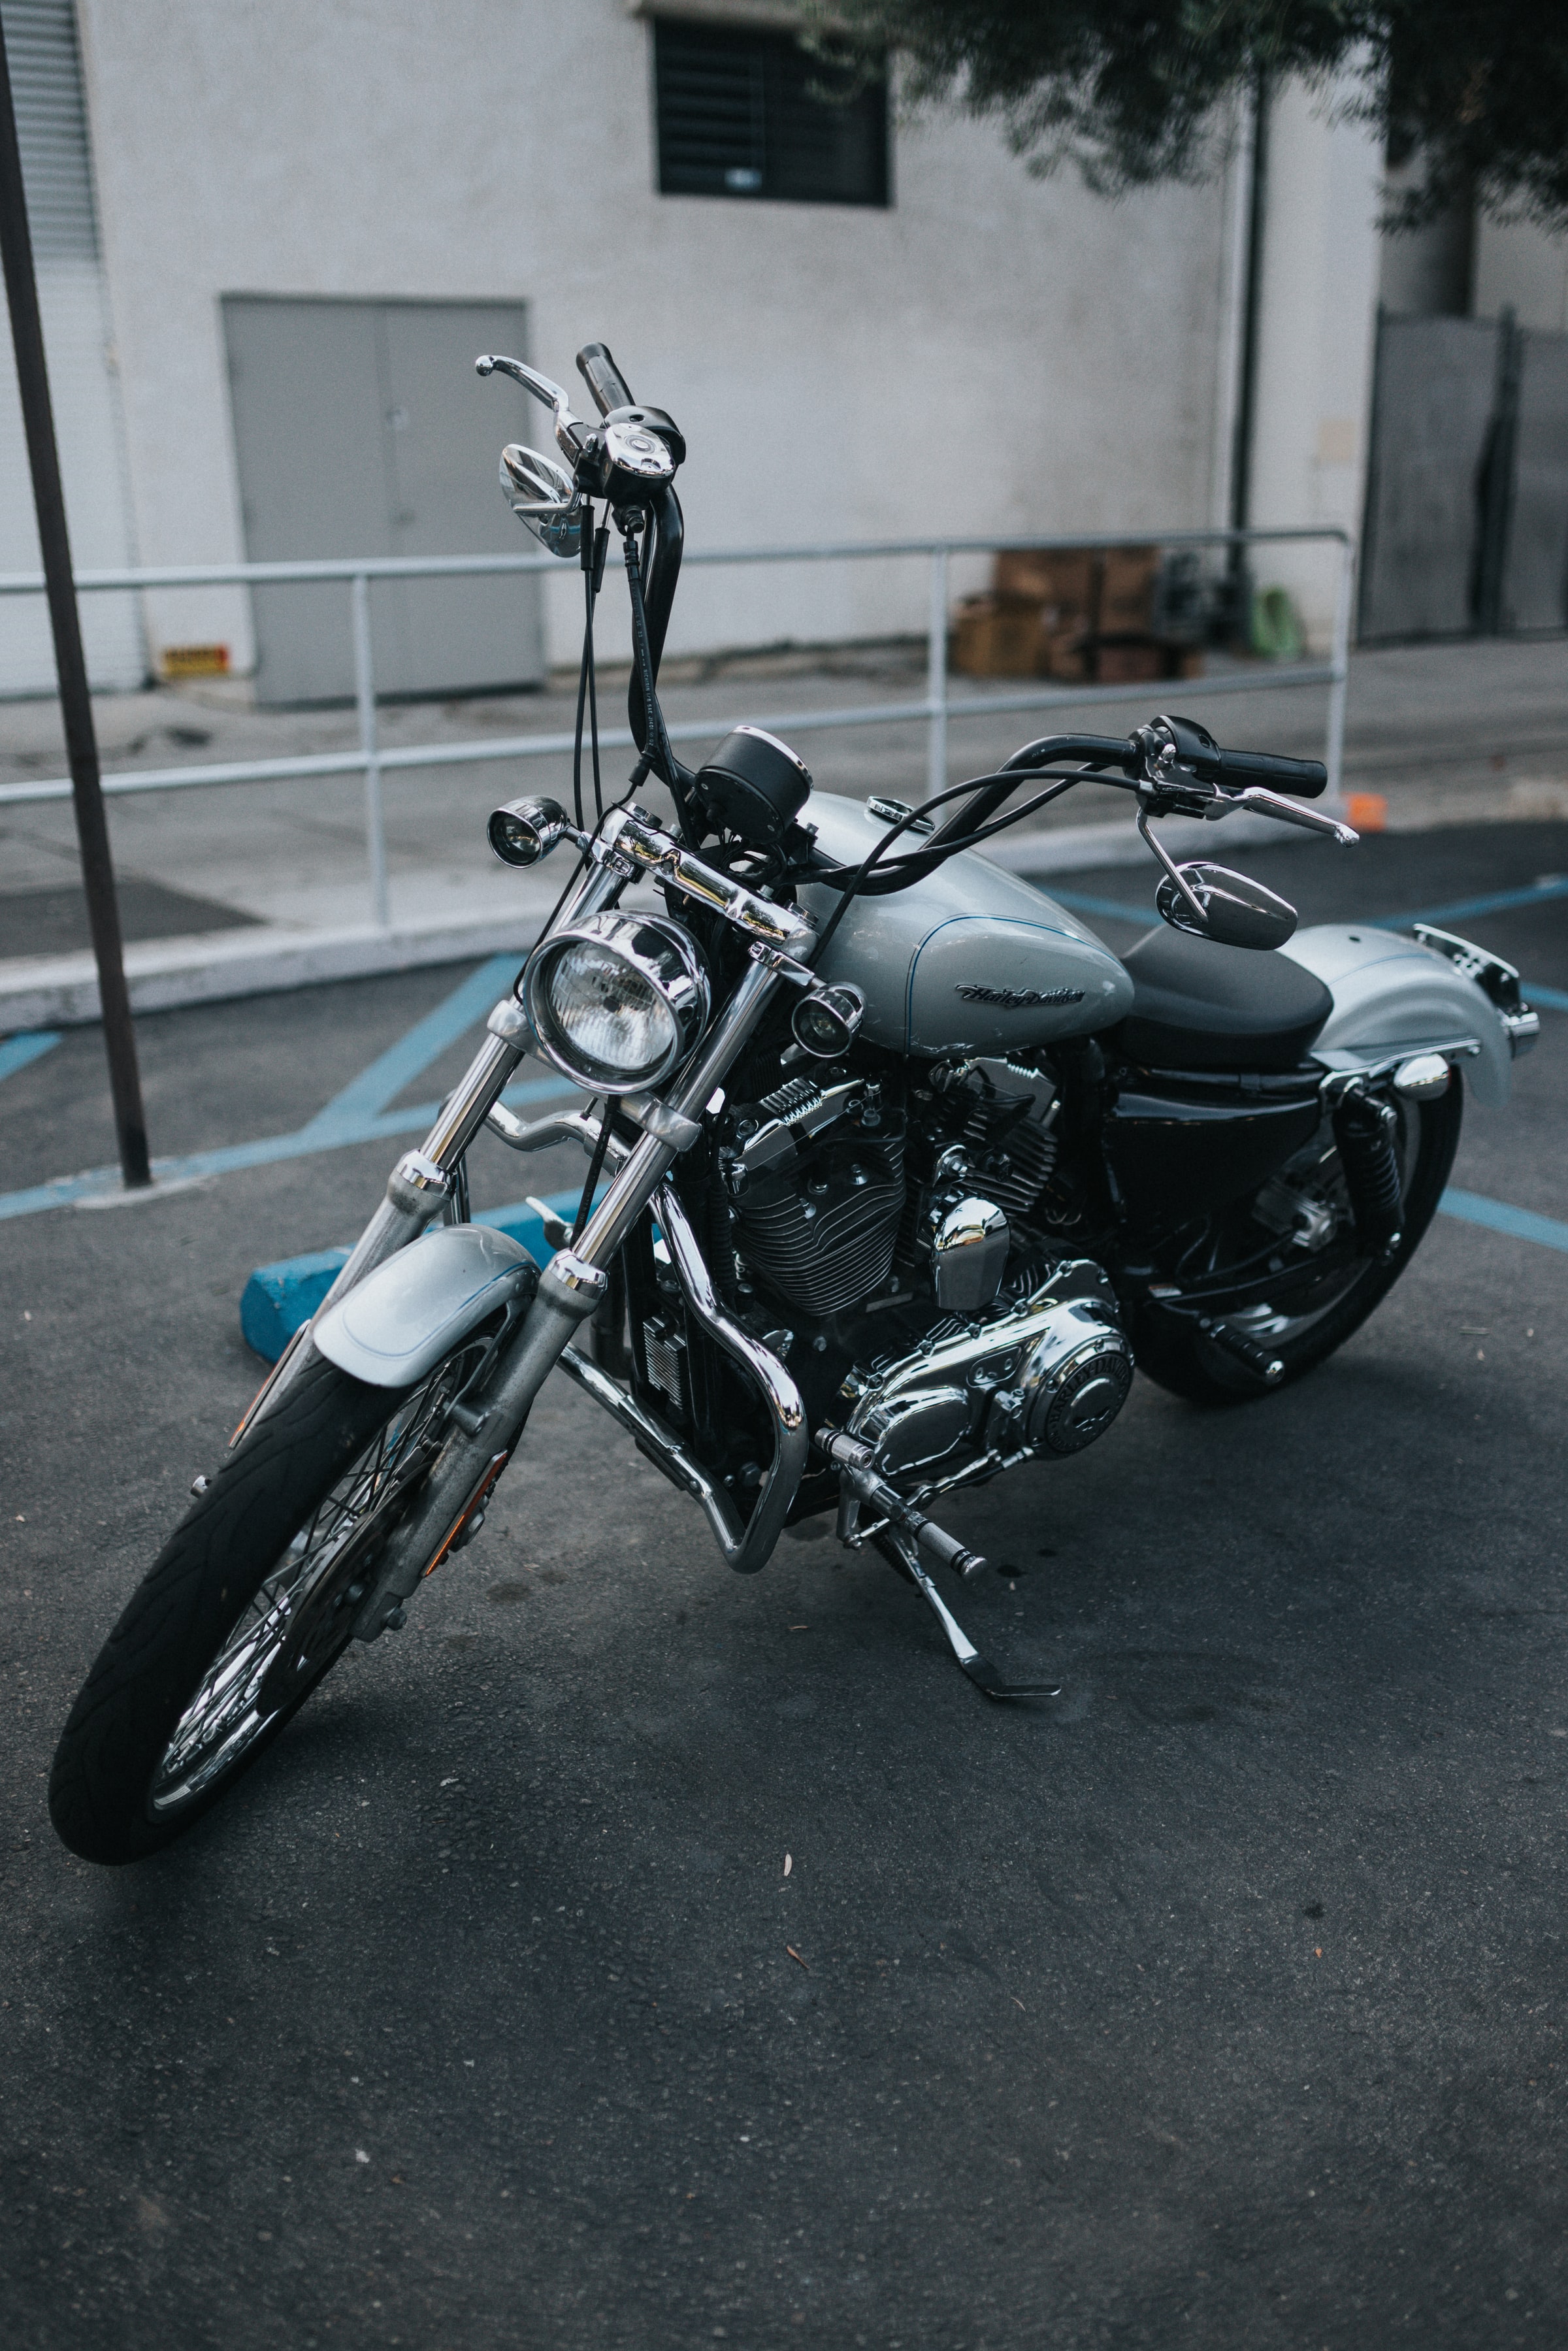 harley davidson, bike, headlight, motorcycles, front view, motorcycle 32K